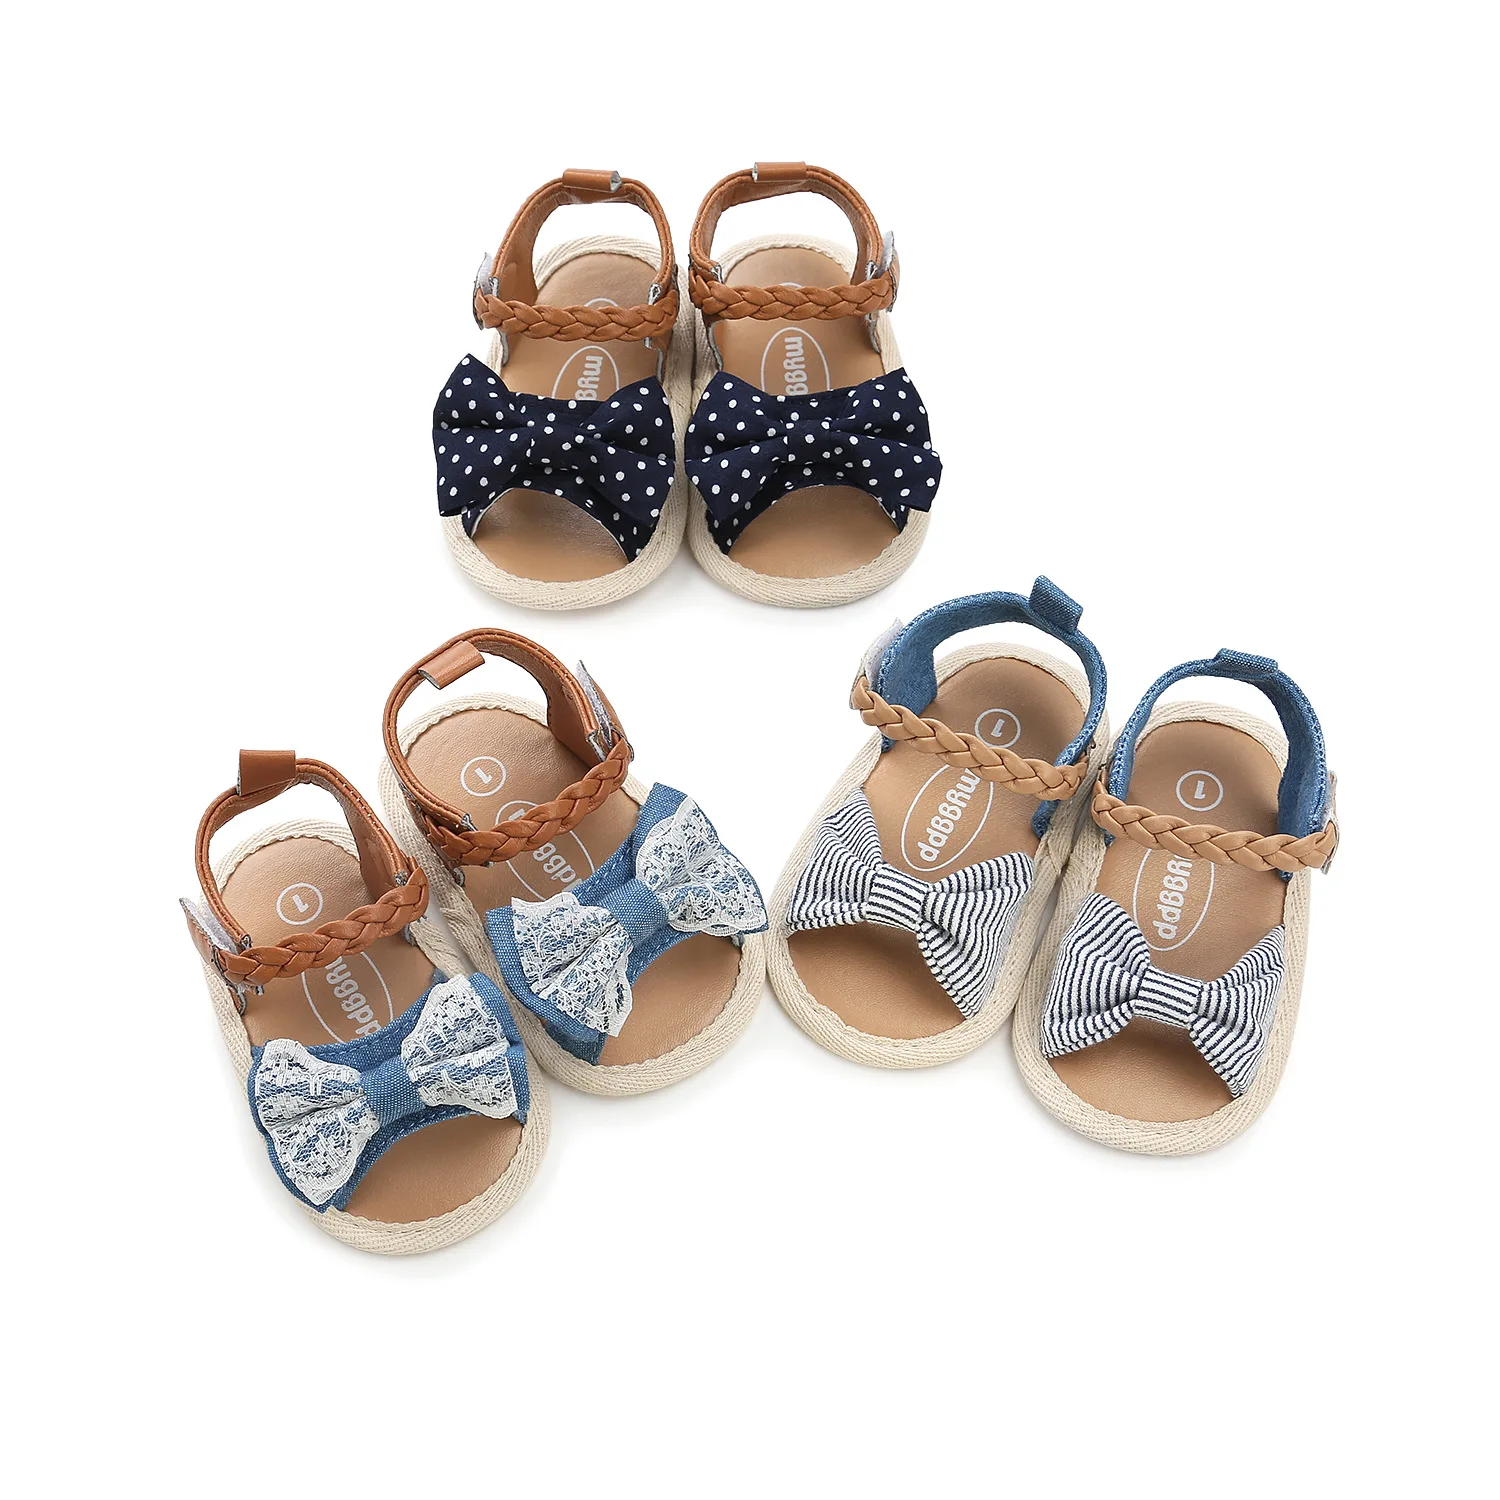 

11cm 12cm 13cm Baby Girls Summer Sandals Soft Sole Infants Crib Shoes Prewalkers Shoes Blue Color Cute Bow Polka-dot